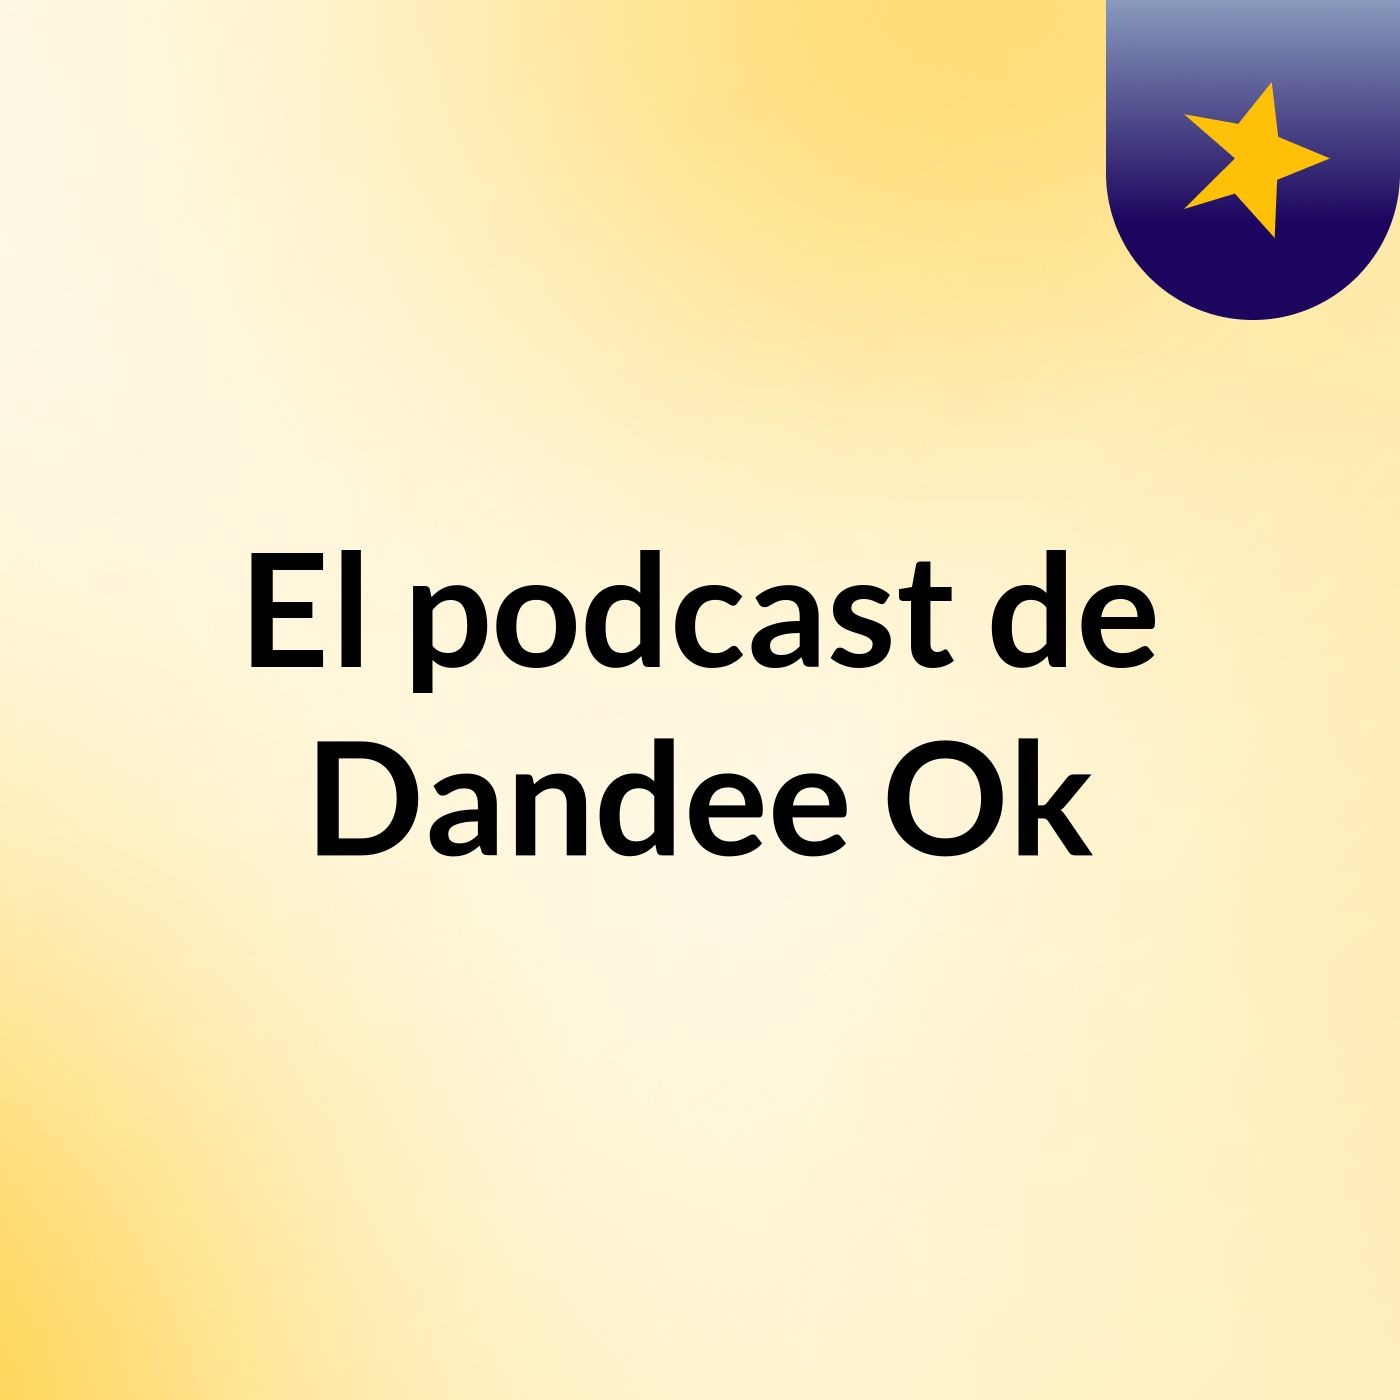 El podcast de Dandee Ok